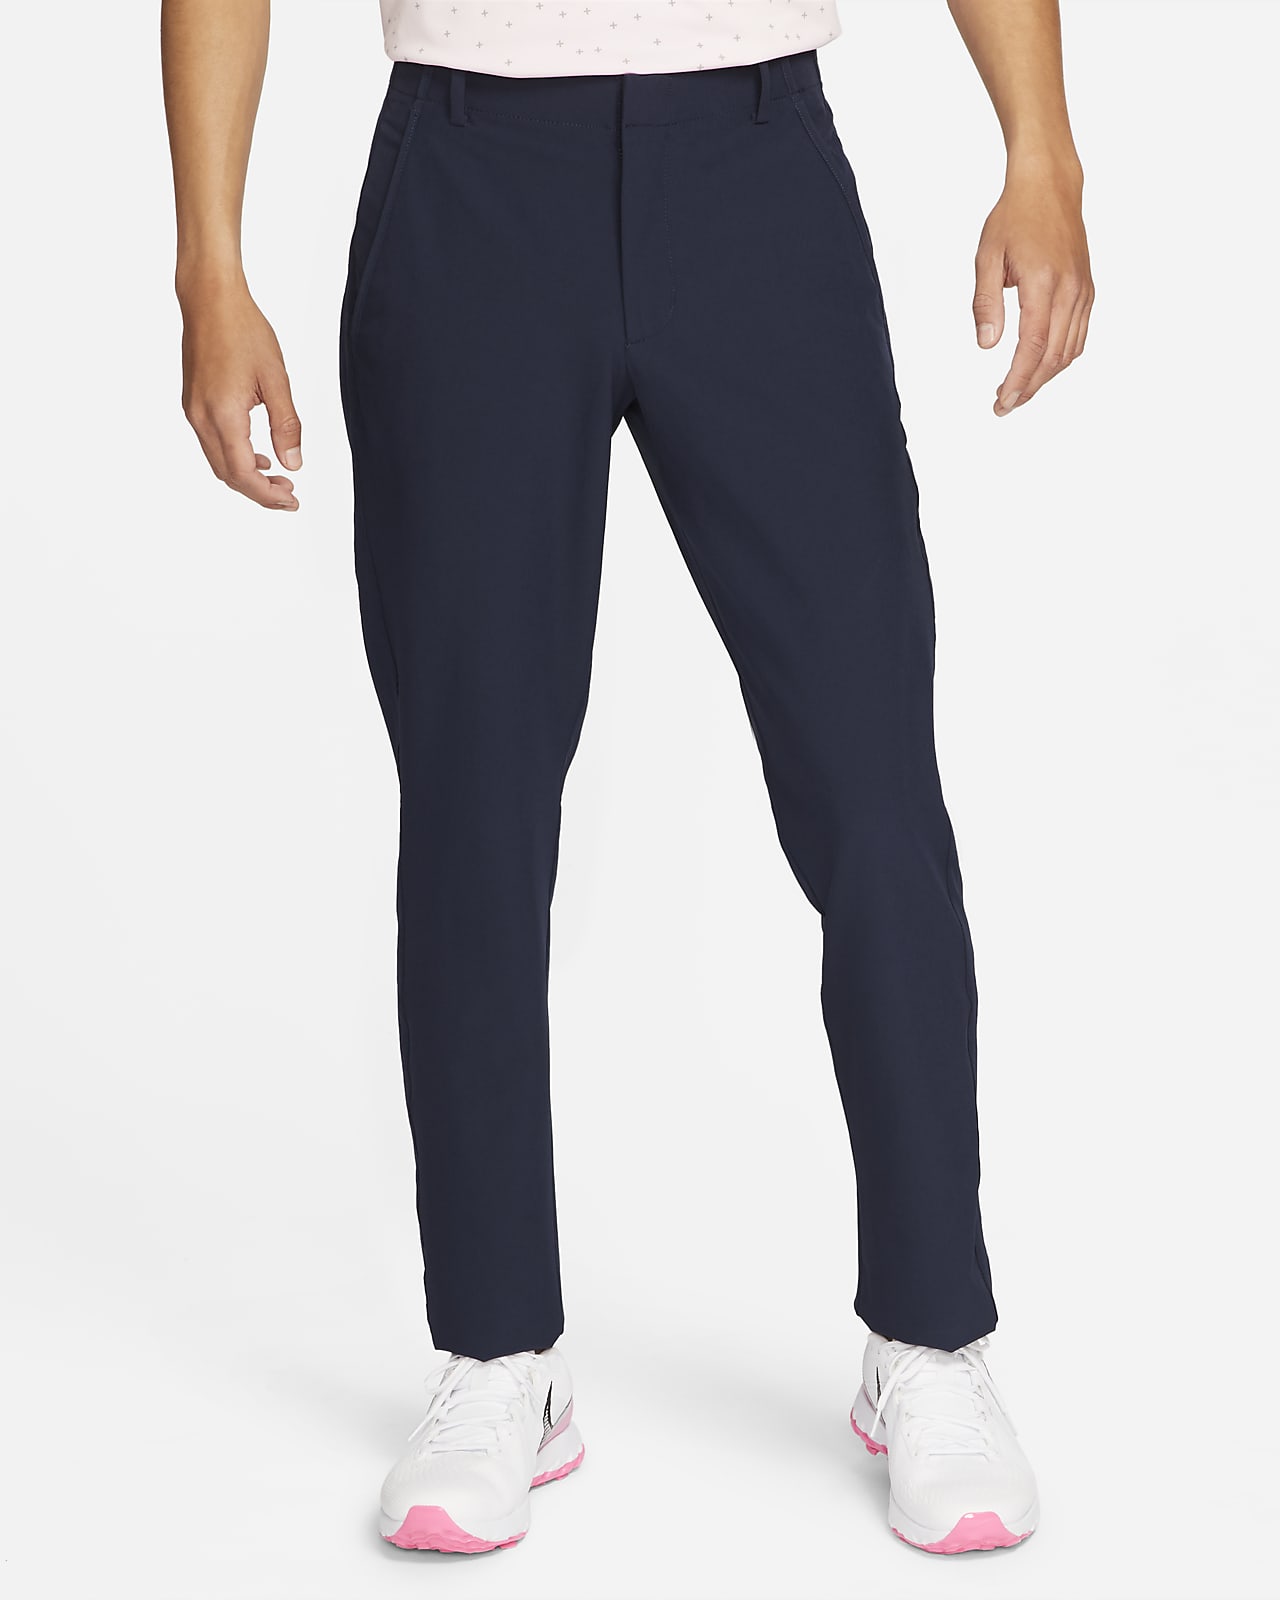 Nike Dri-FIT Vapor Men's Slim Fit Golf Pants